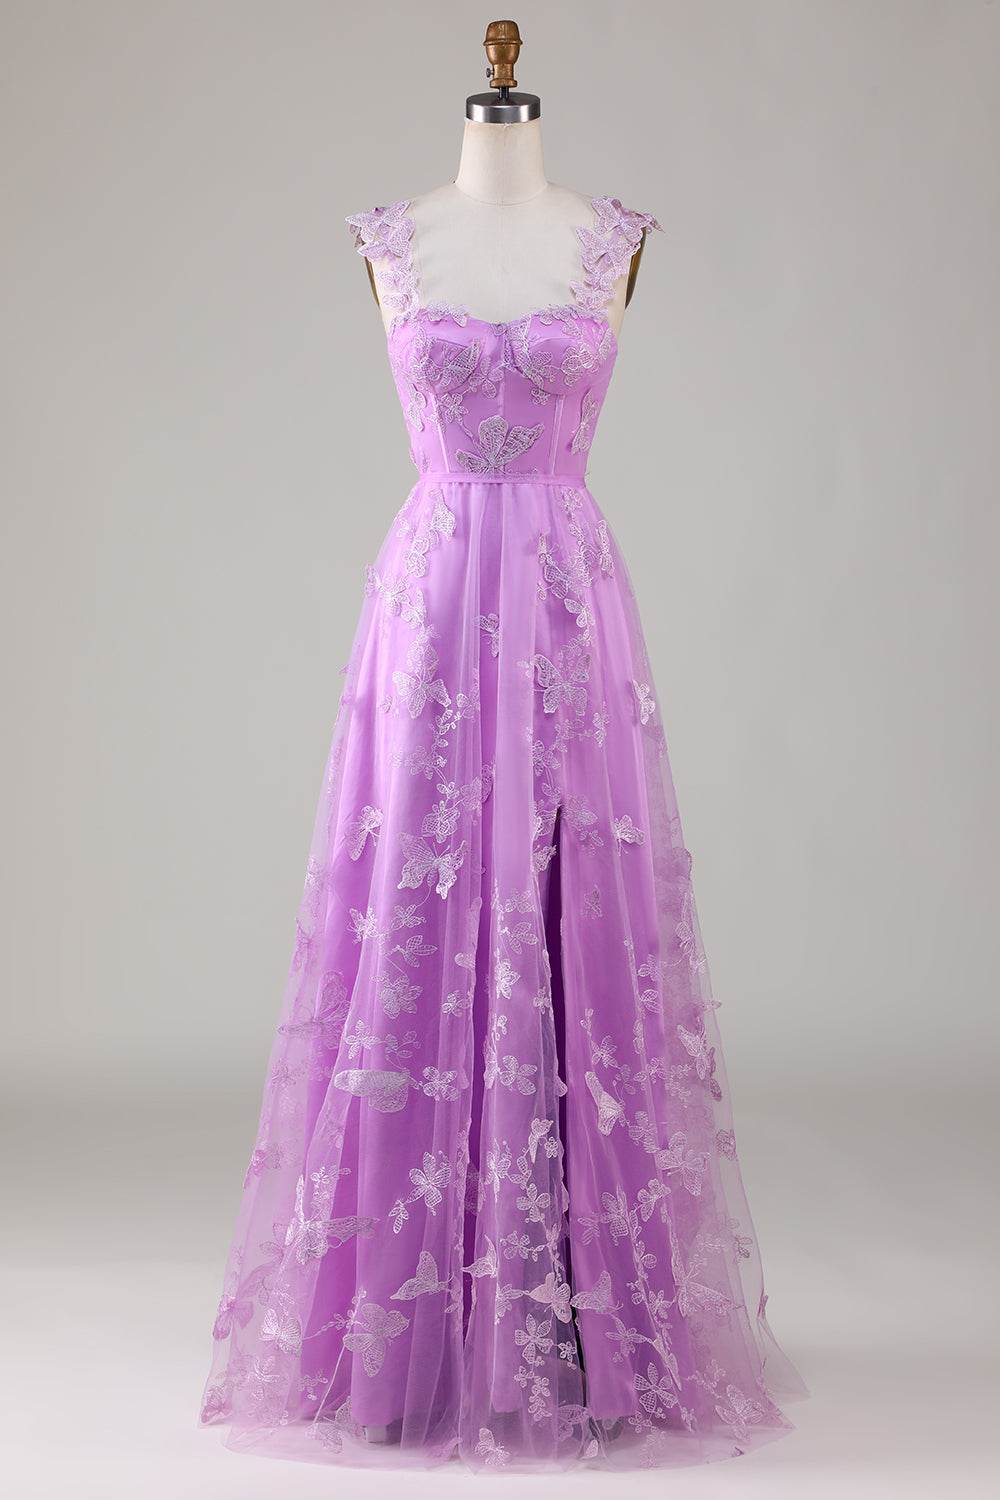 Purple A Line Square Neck Corset Long Prom Dress with 3D Butterflies